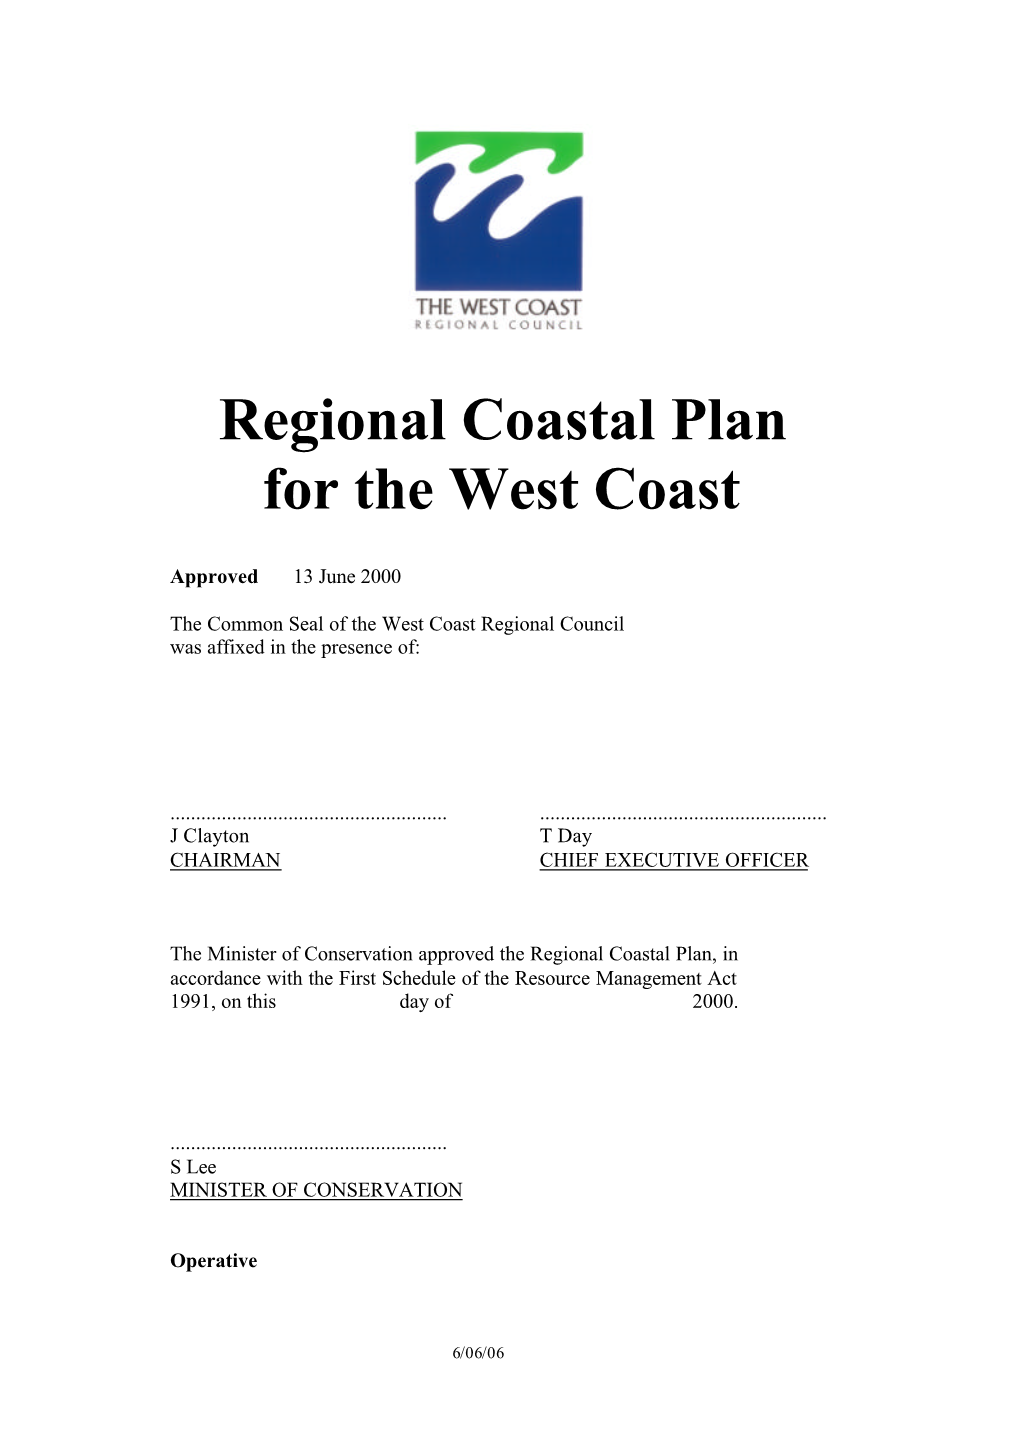 West Coast Regional Coastal Plan